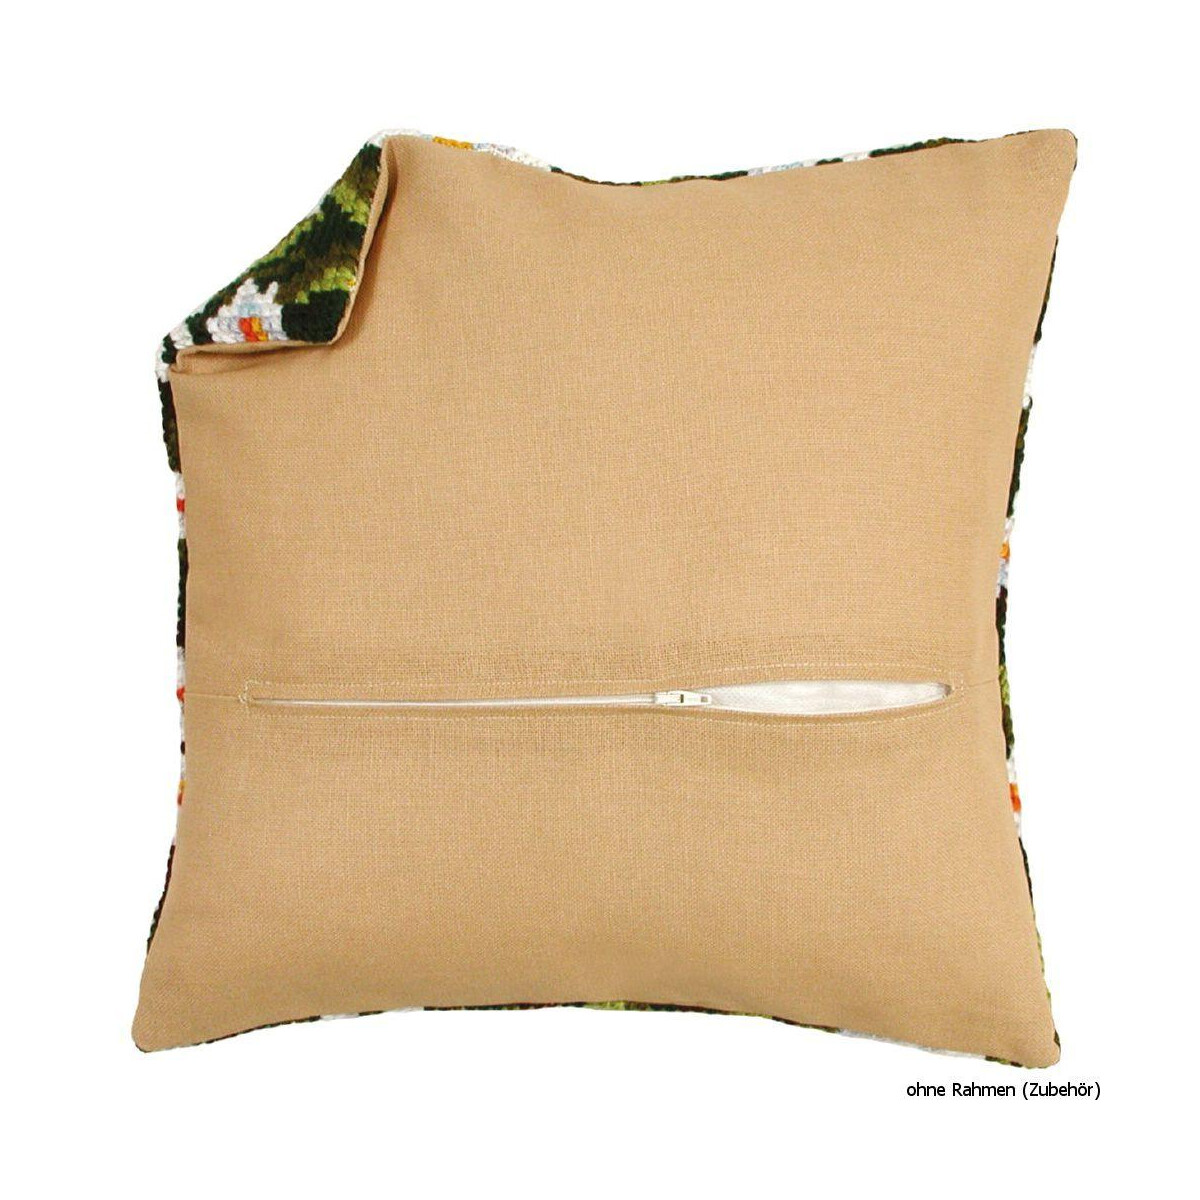 Schienale del cuscino Vervaco con cerniera 35 x 45 cm, beige